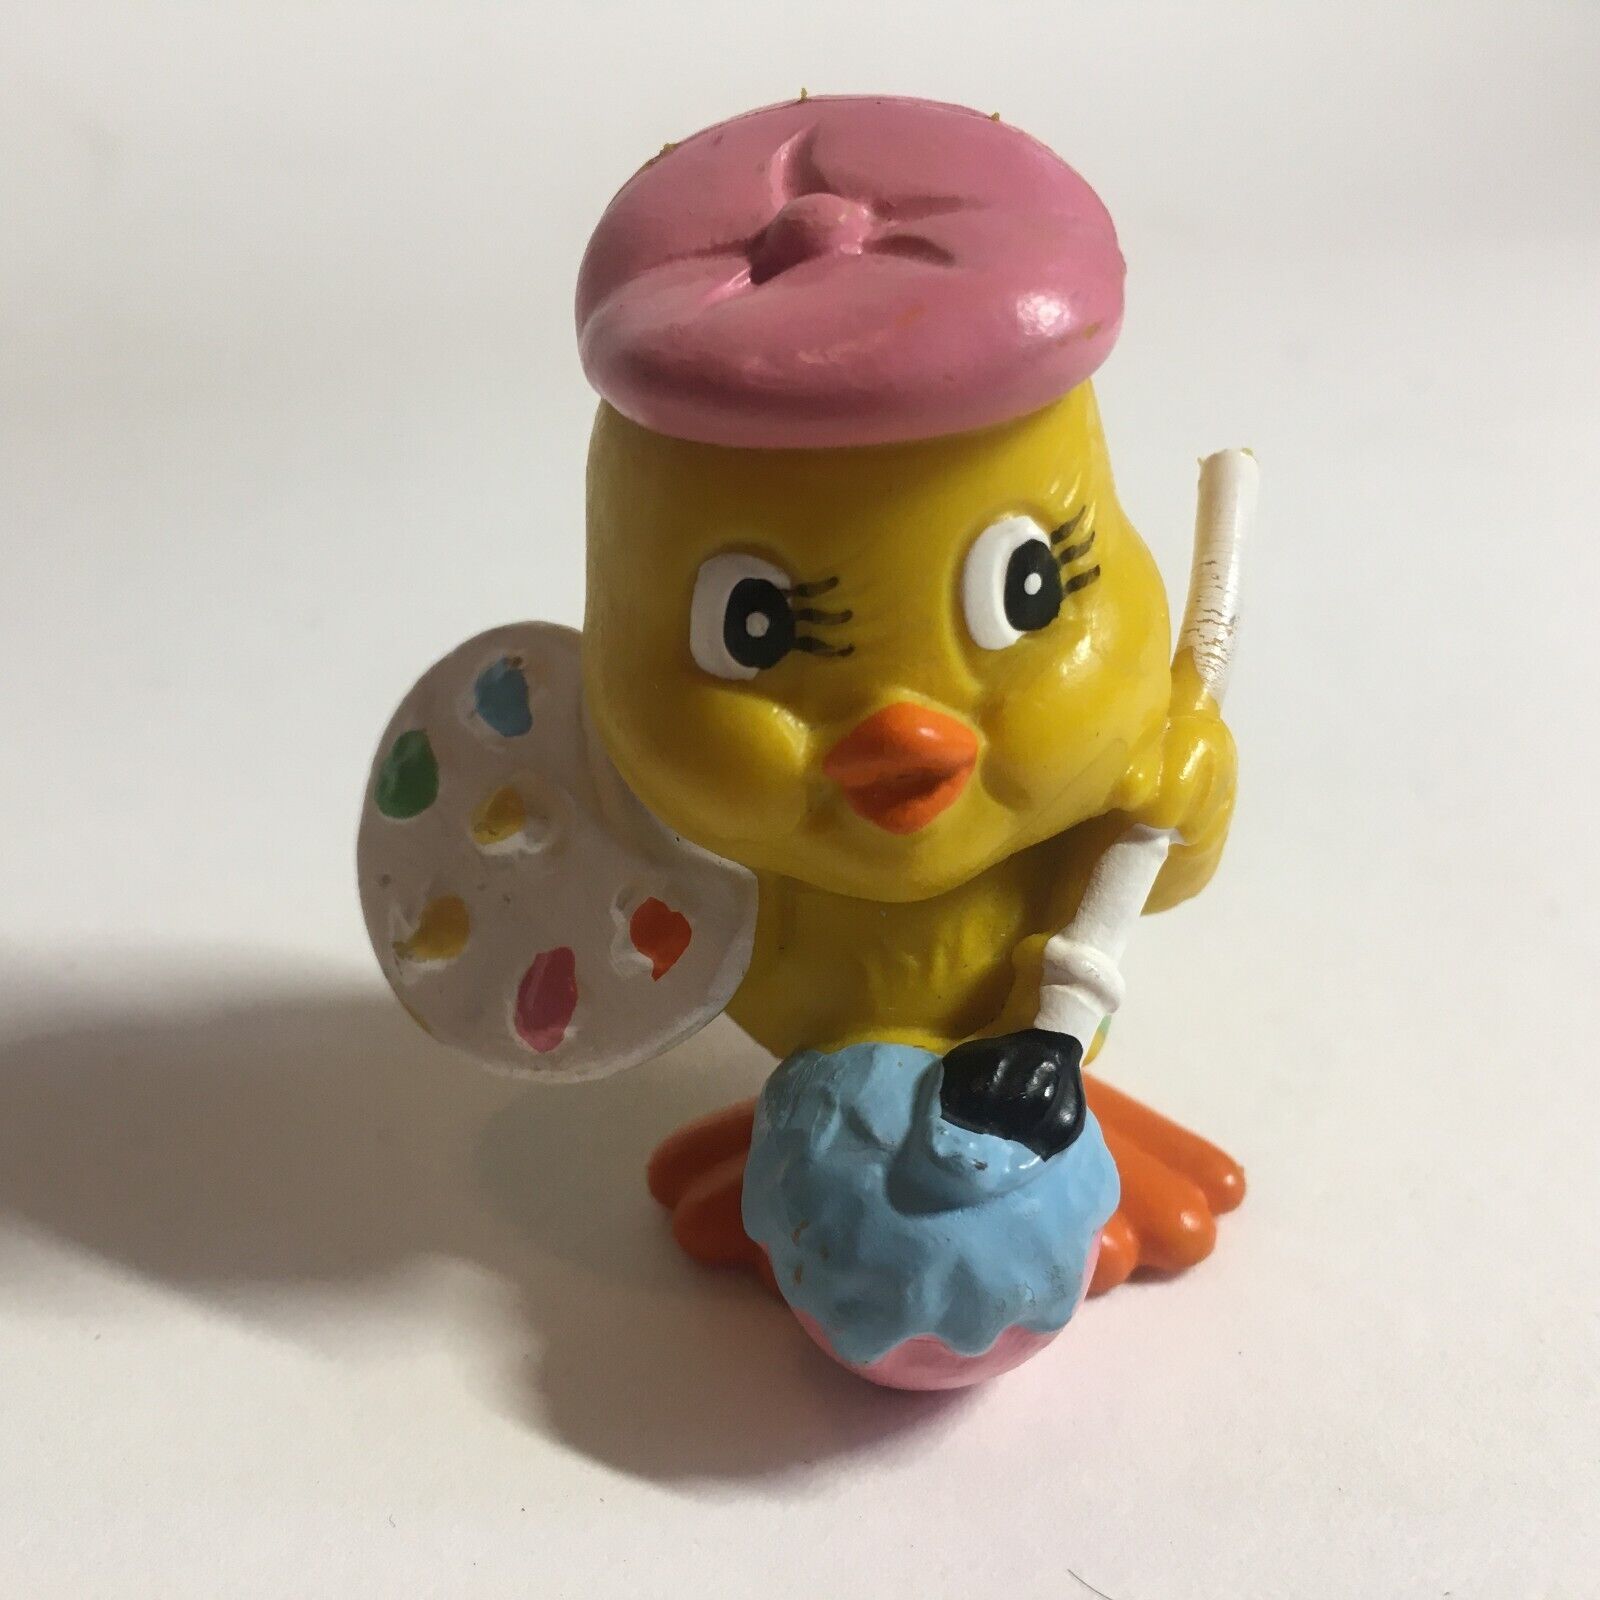 Berrie 1979 Yellow Bird Duck Chick Paint Easter Egg Artist Palette Toy Figurine